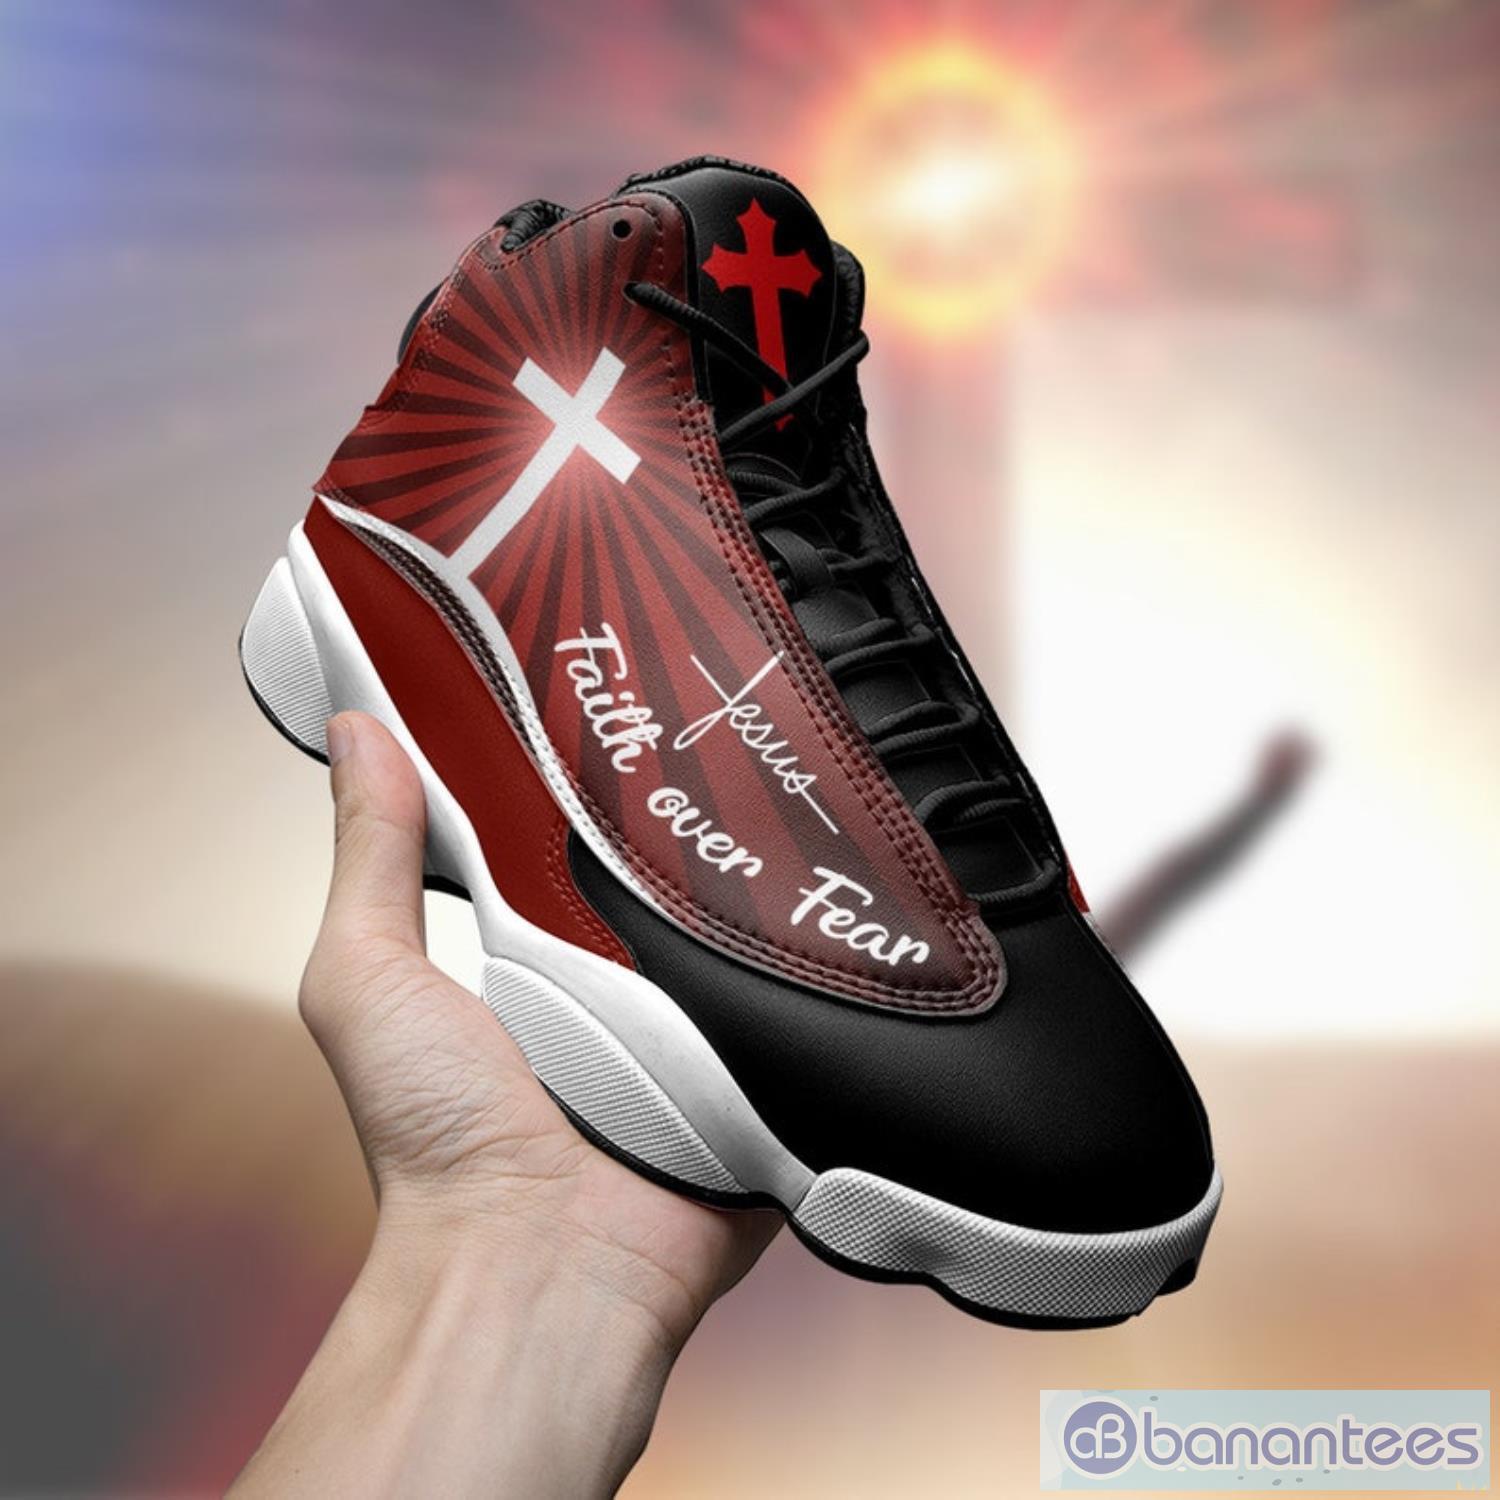 Jesus Saved My Life Sneakers Custom Jordan 13 Shoes